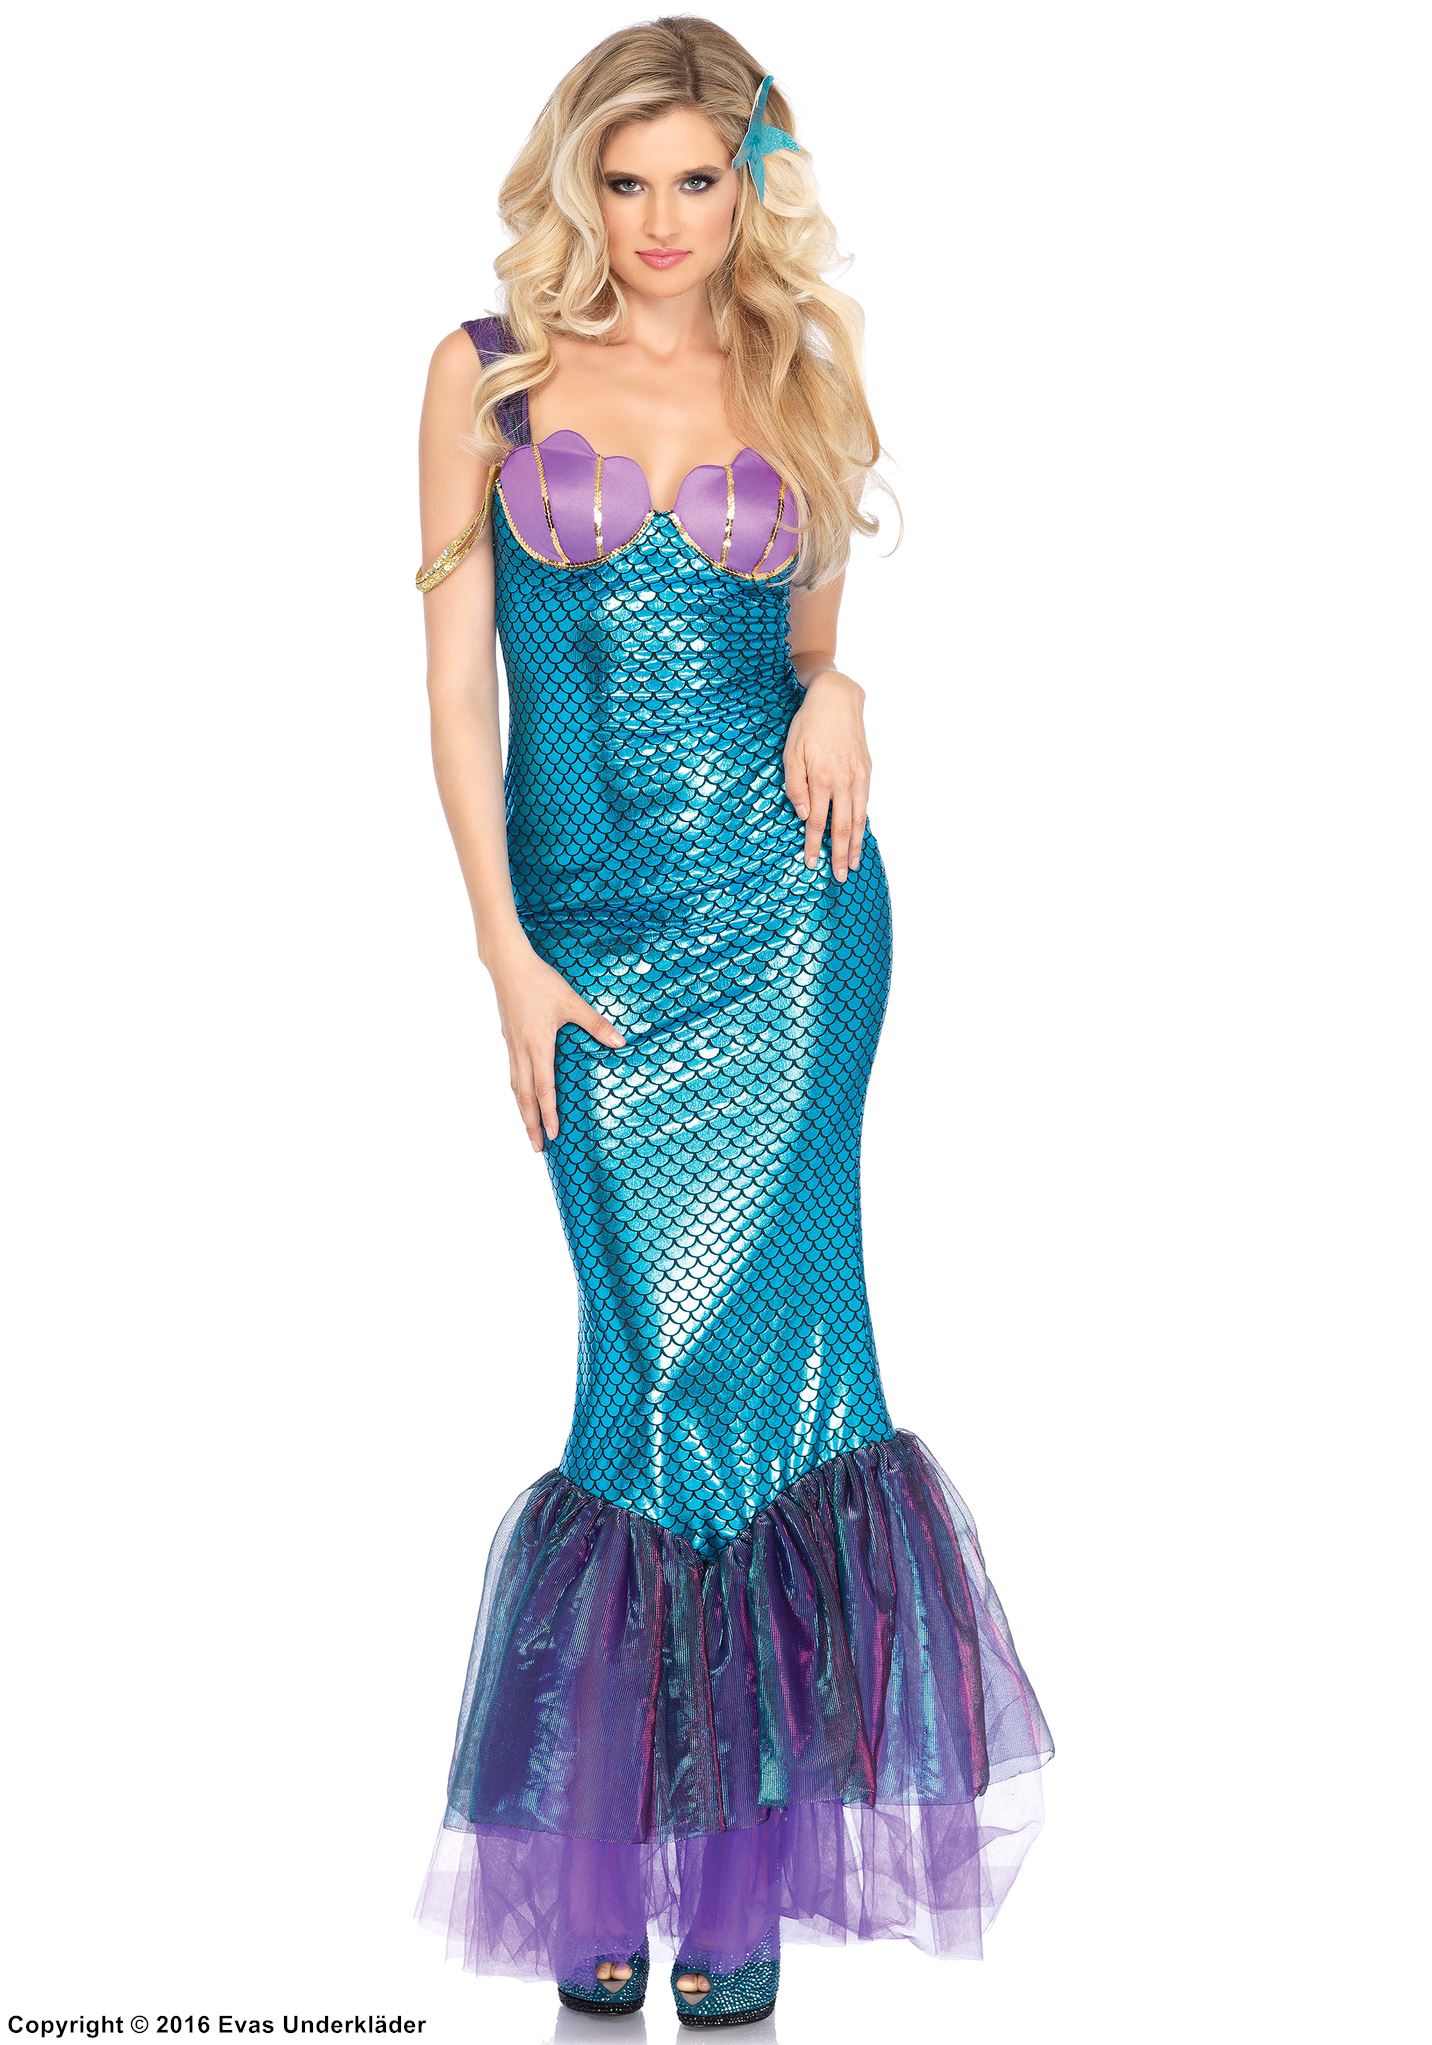 Mermaid, costume dress, sequins, mesh inlay, seashell